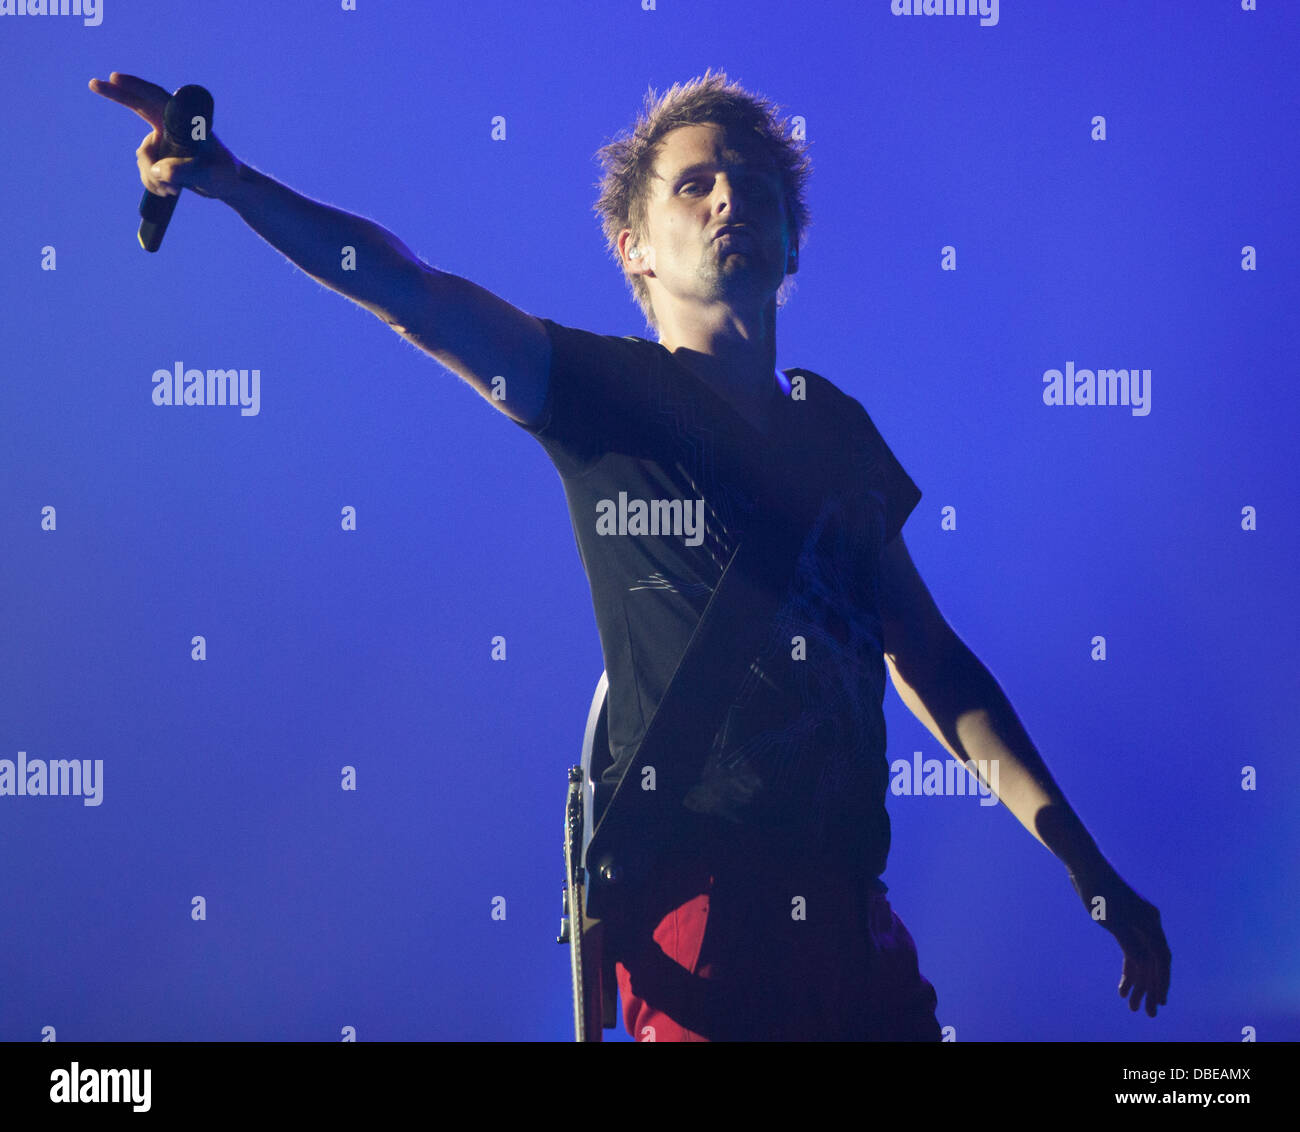 Muse live in concert, Telenor Arena, Norway. Matthew Bellamy. Stock Photo